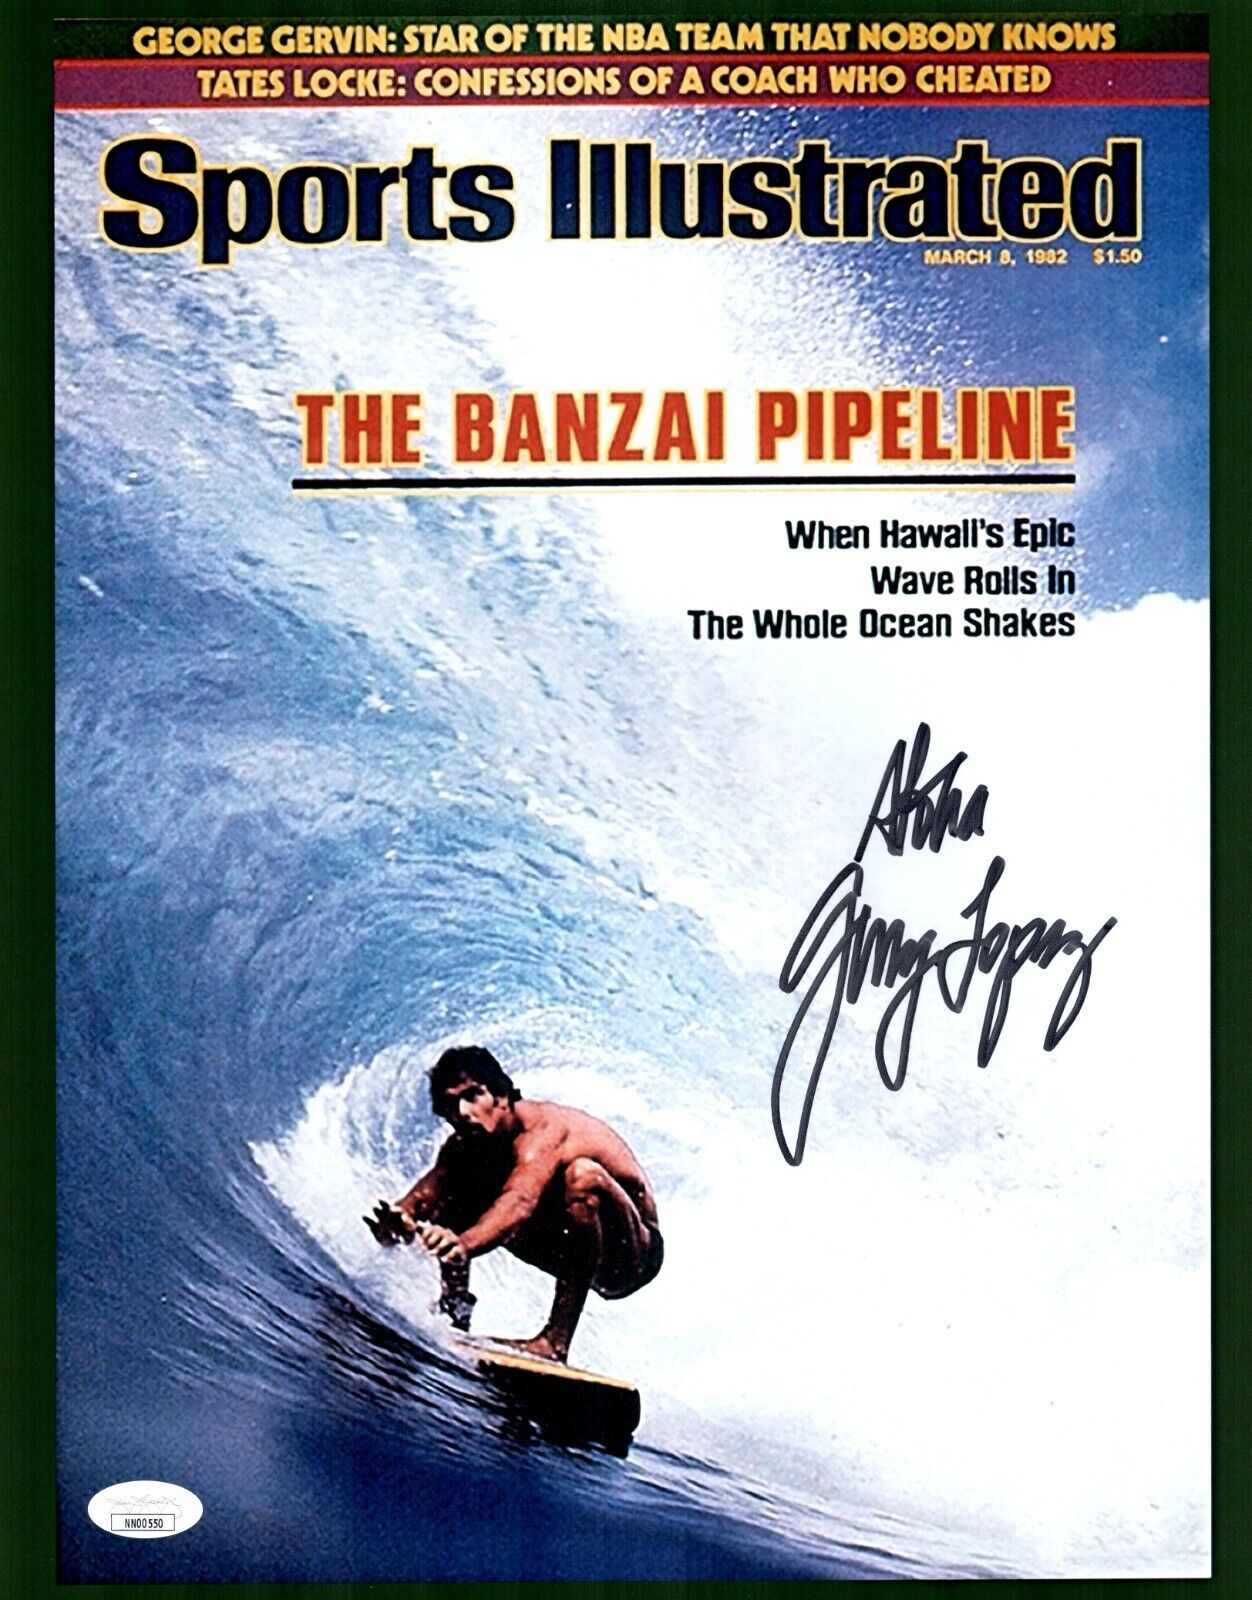 GERRY LOPEZ Signed MR. PIPELINE Surfing Legend 11x14 Photo Poster painting Autograph JSA COA